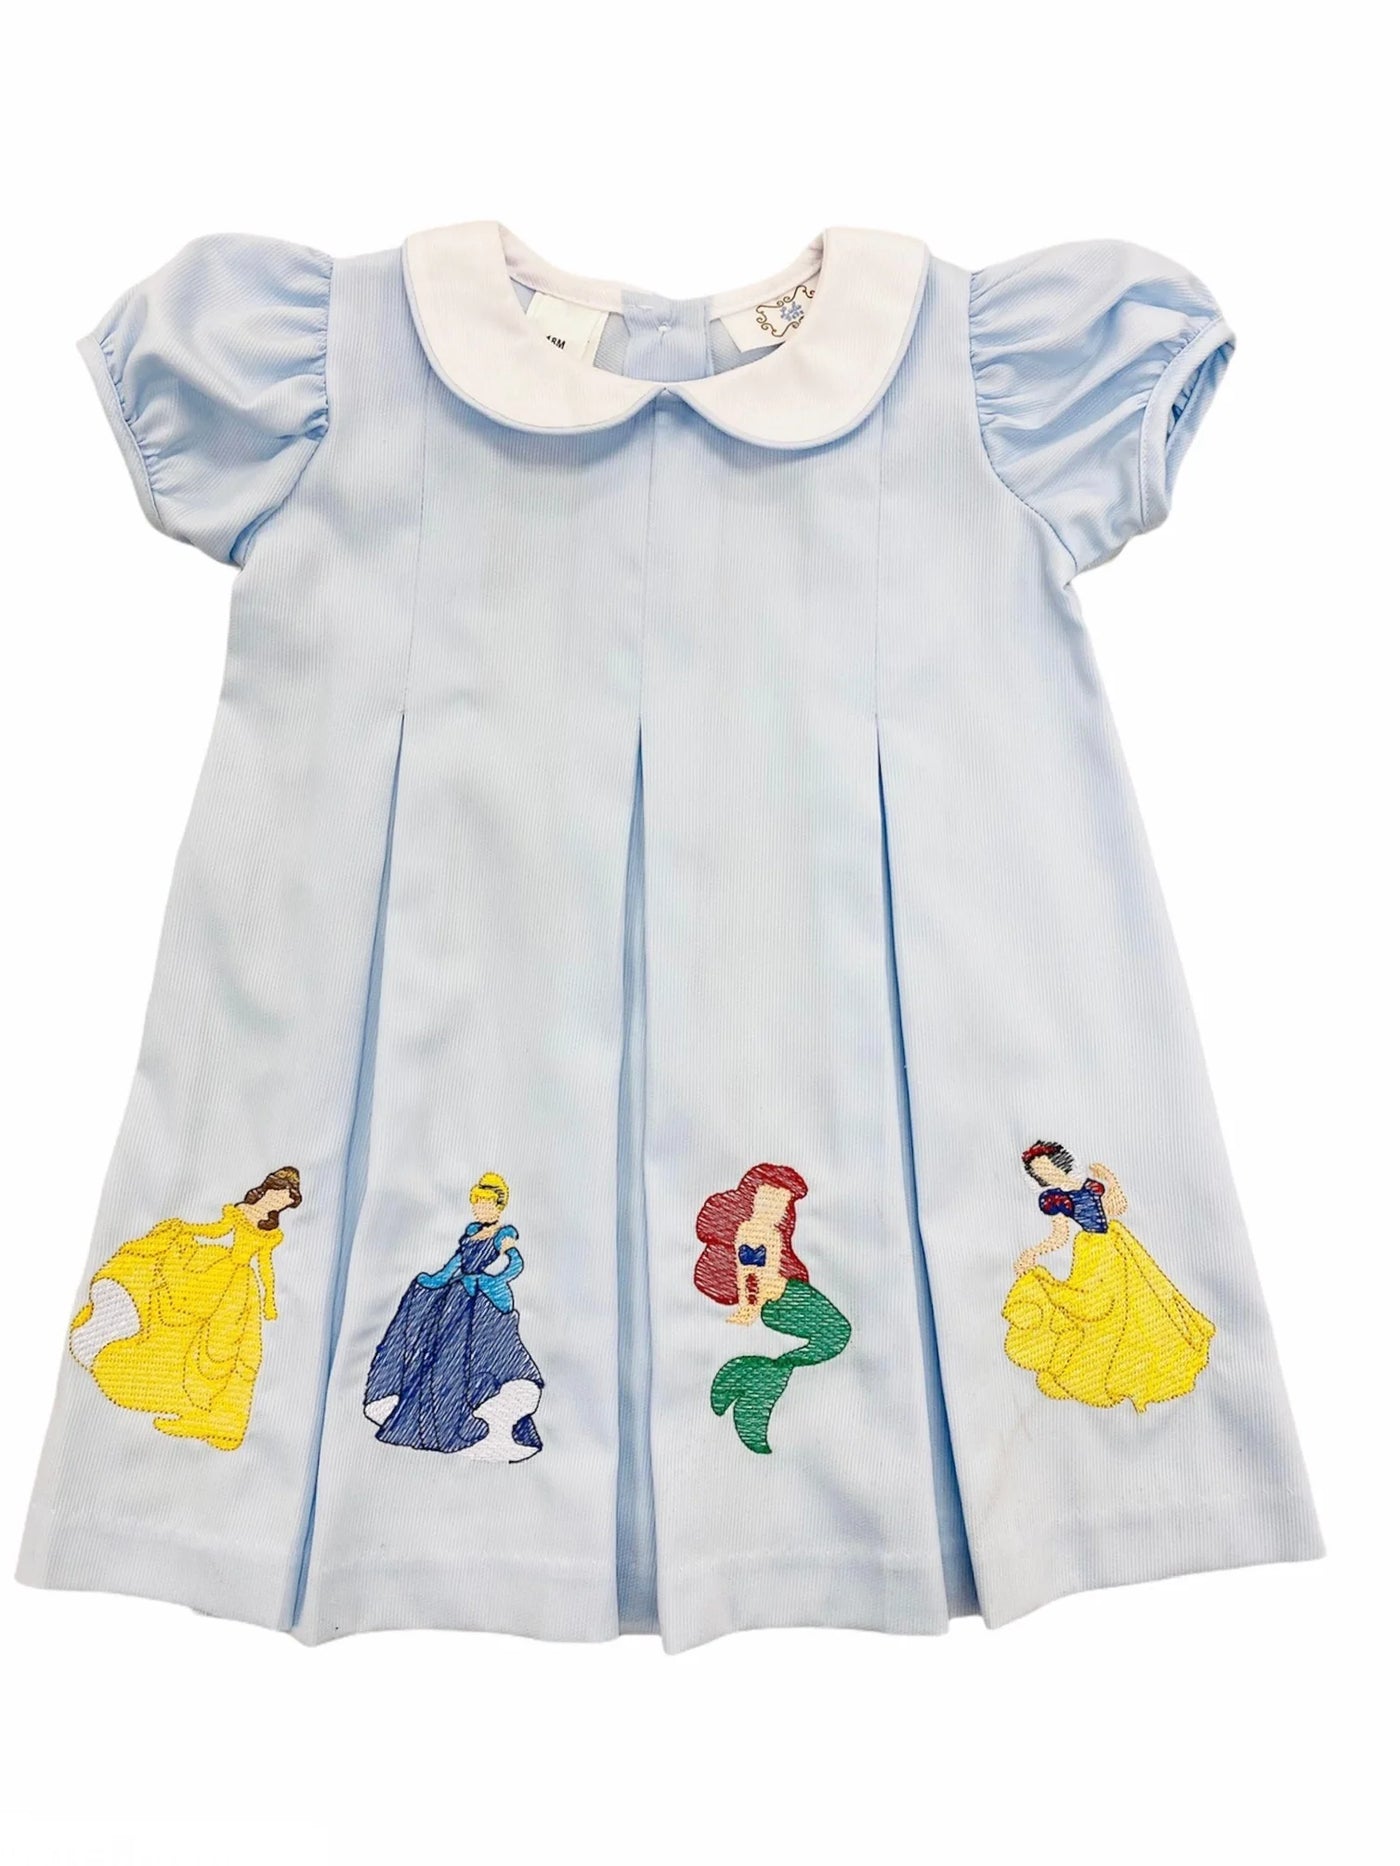 Embroidered princess dress